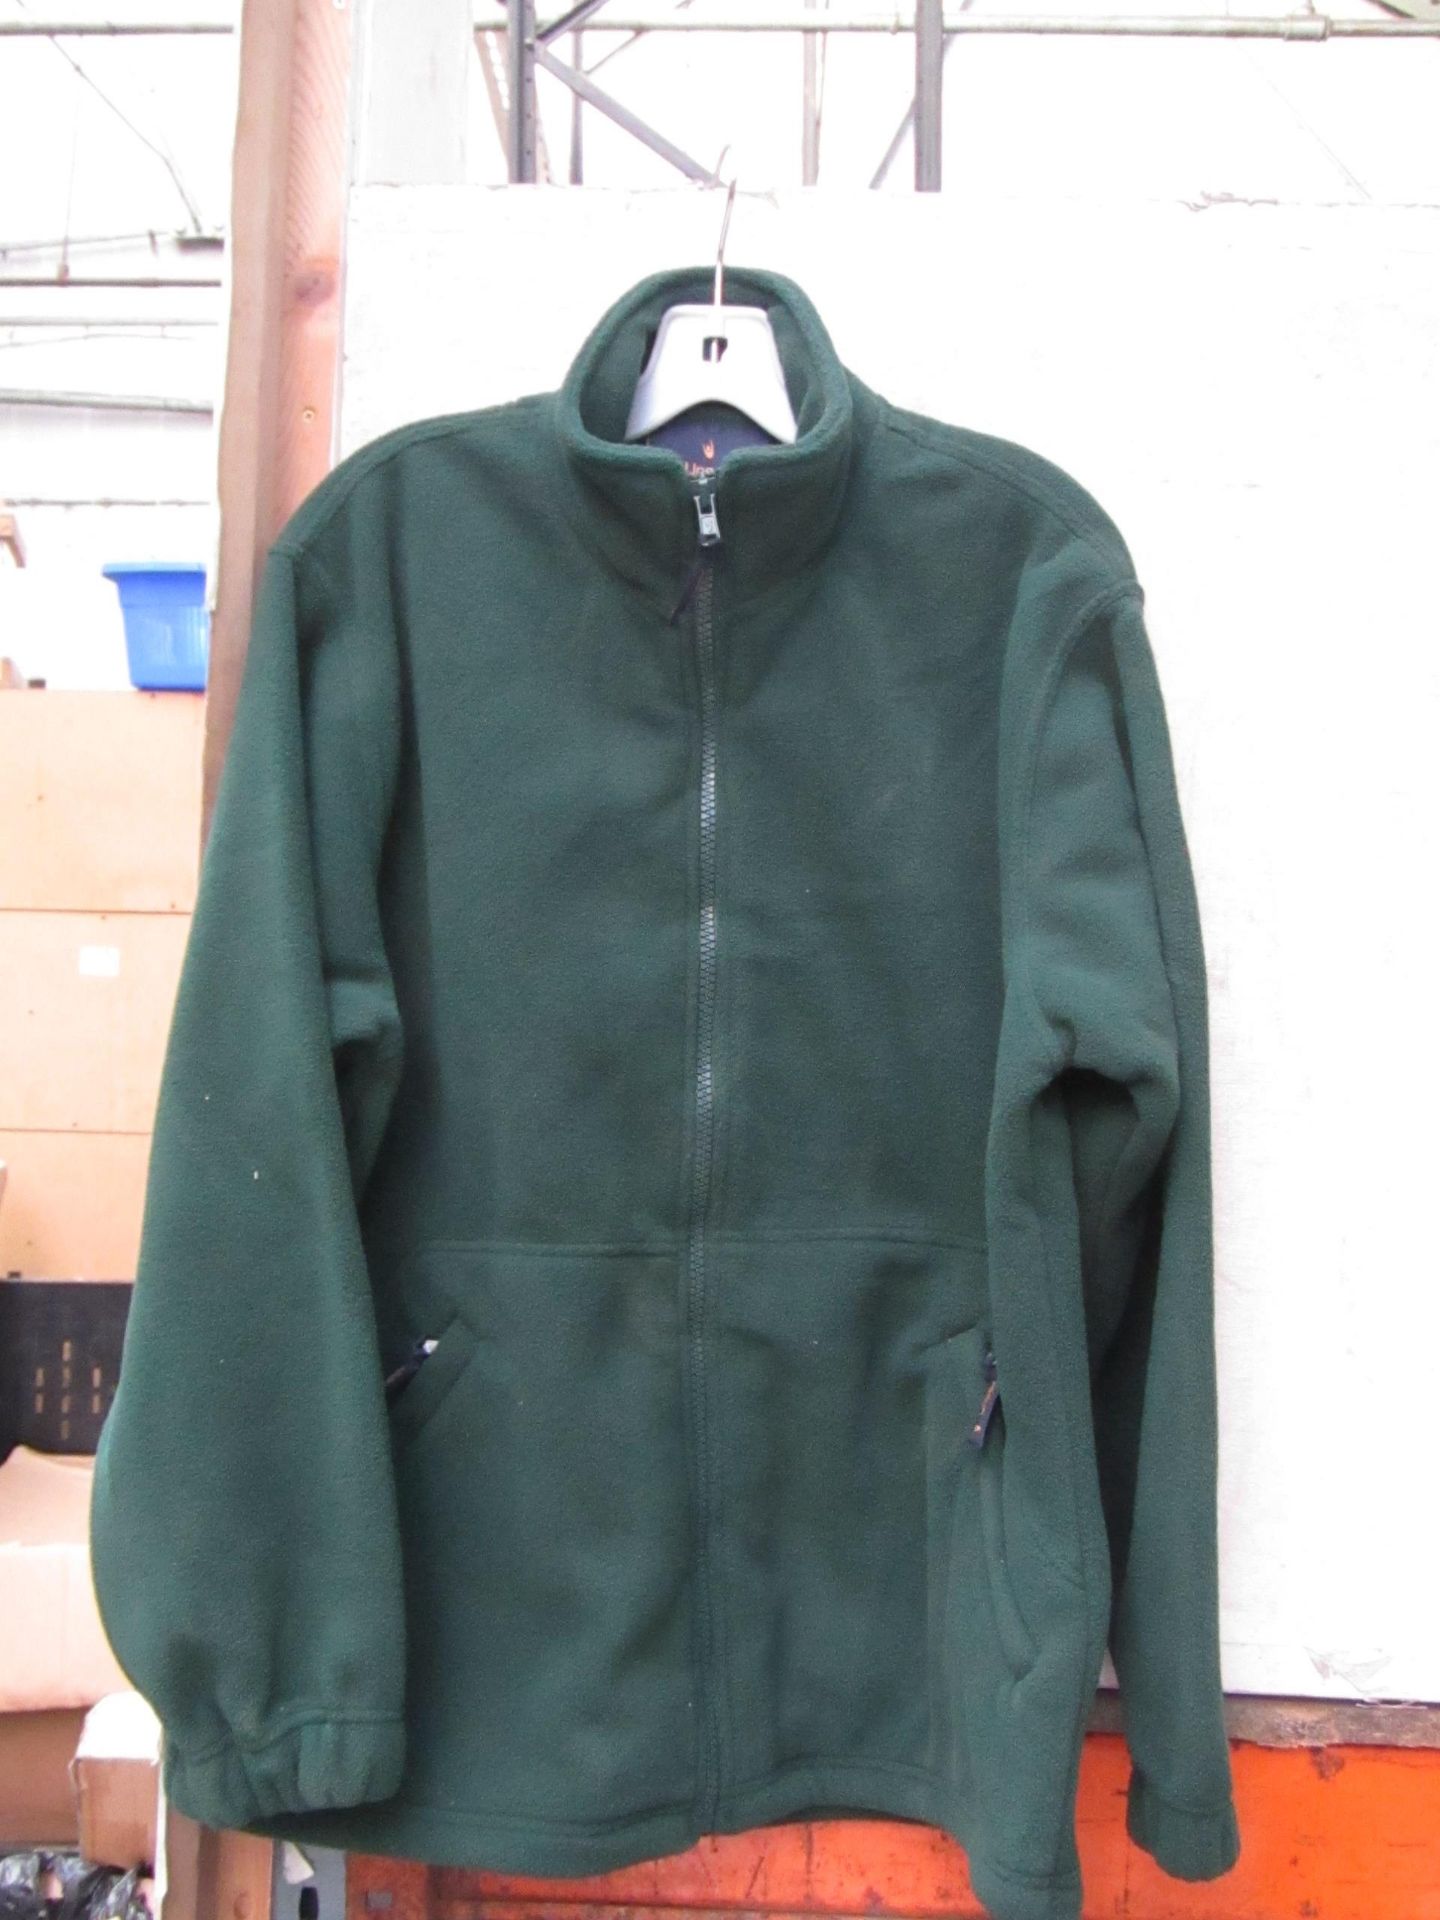 Uneek Premium Green Fleece jacket, new, size Medium